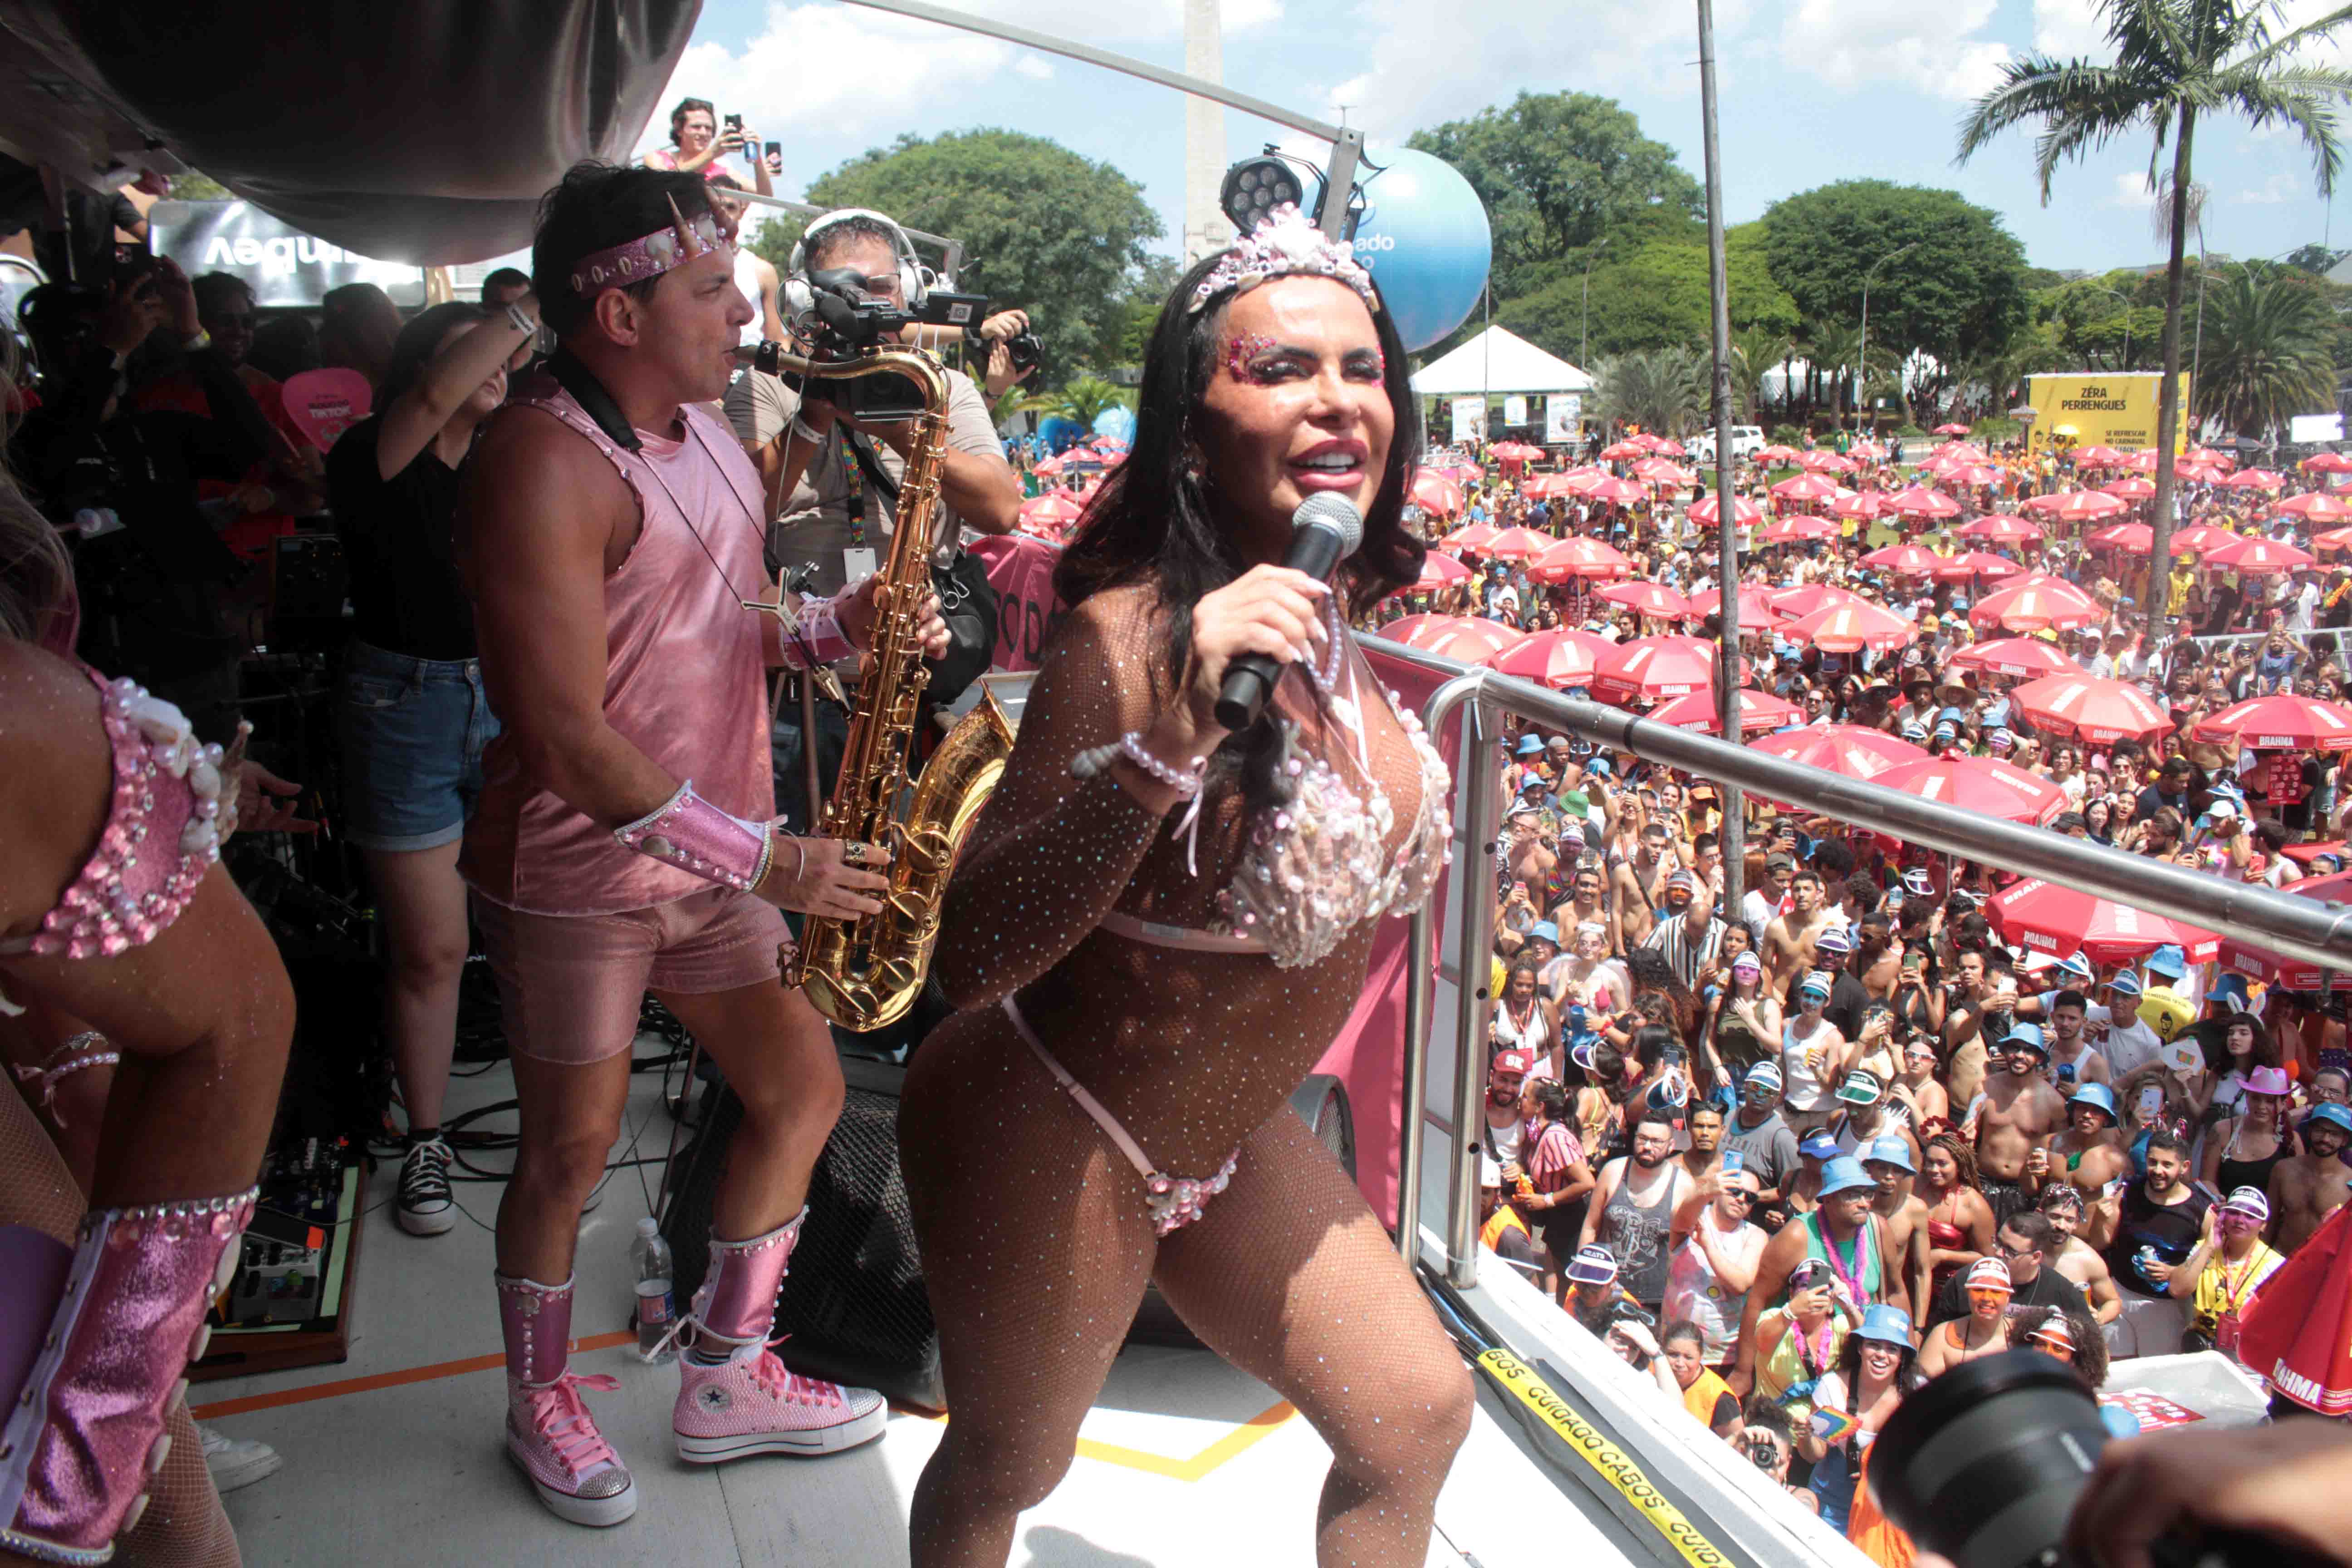 Gretchen curte Carnaval em Bloco do Agrada Gregos no Ibirapuera orlando oliveira